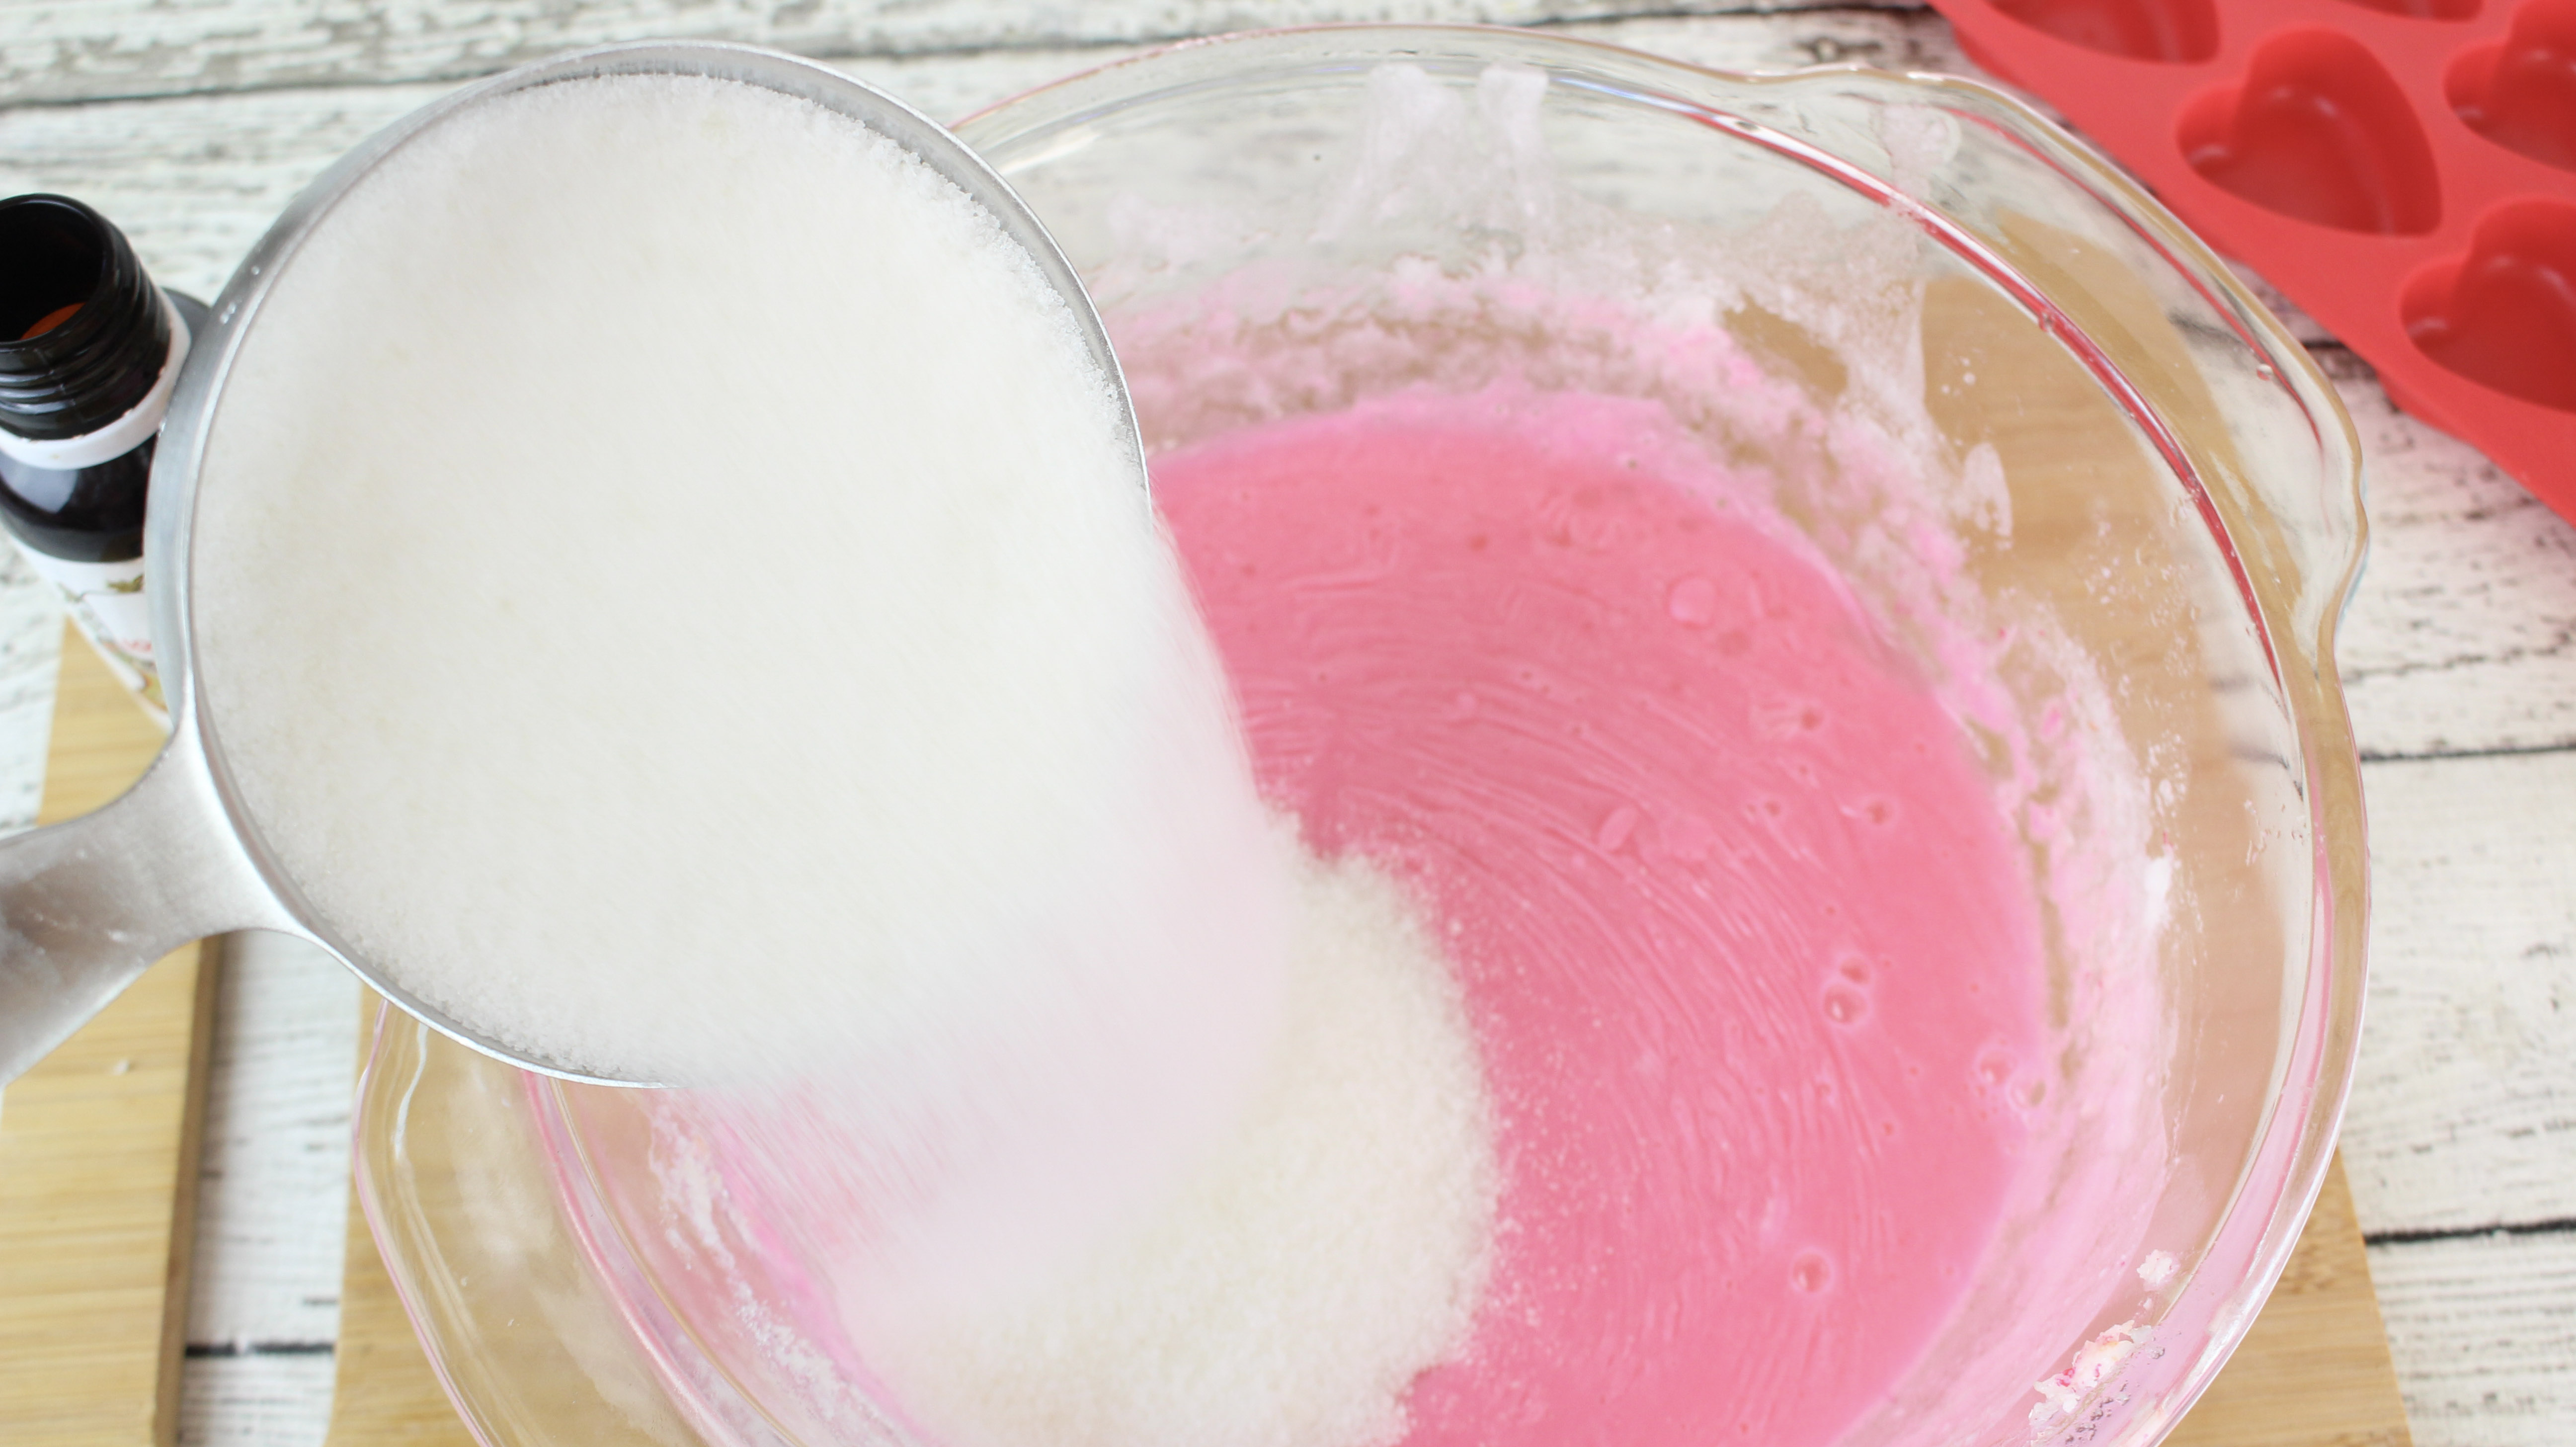 Add in sugar to the soap mixture to make Rose Vanilla Exfoliating Sugar Scrub Soap Cubes